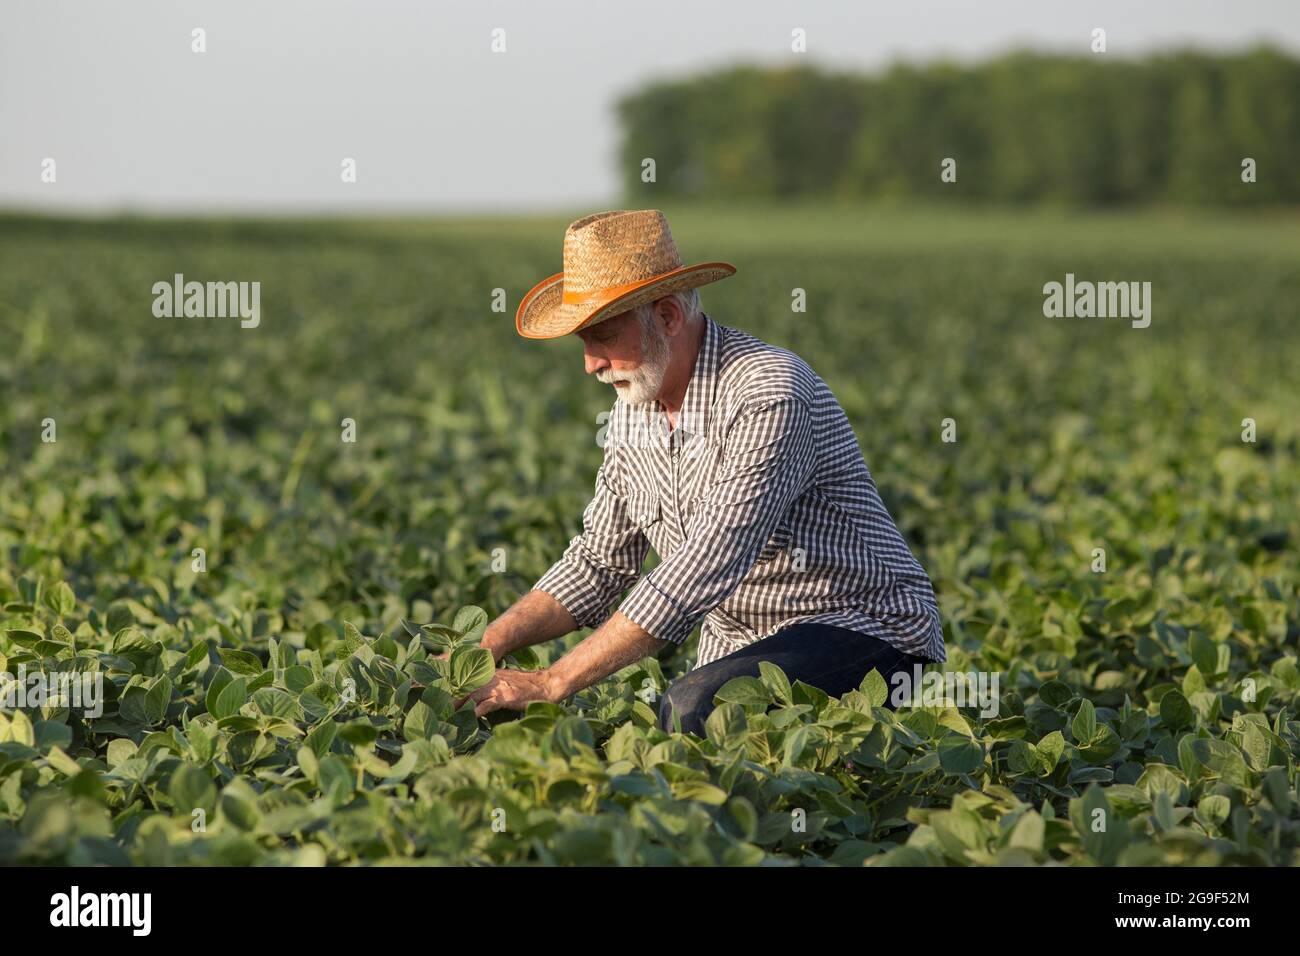 Senior agronomist working in soy field wearing straw hat. Elderly farmer crouching picking monitoring plants. Stock Photo